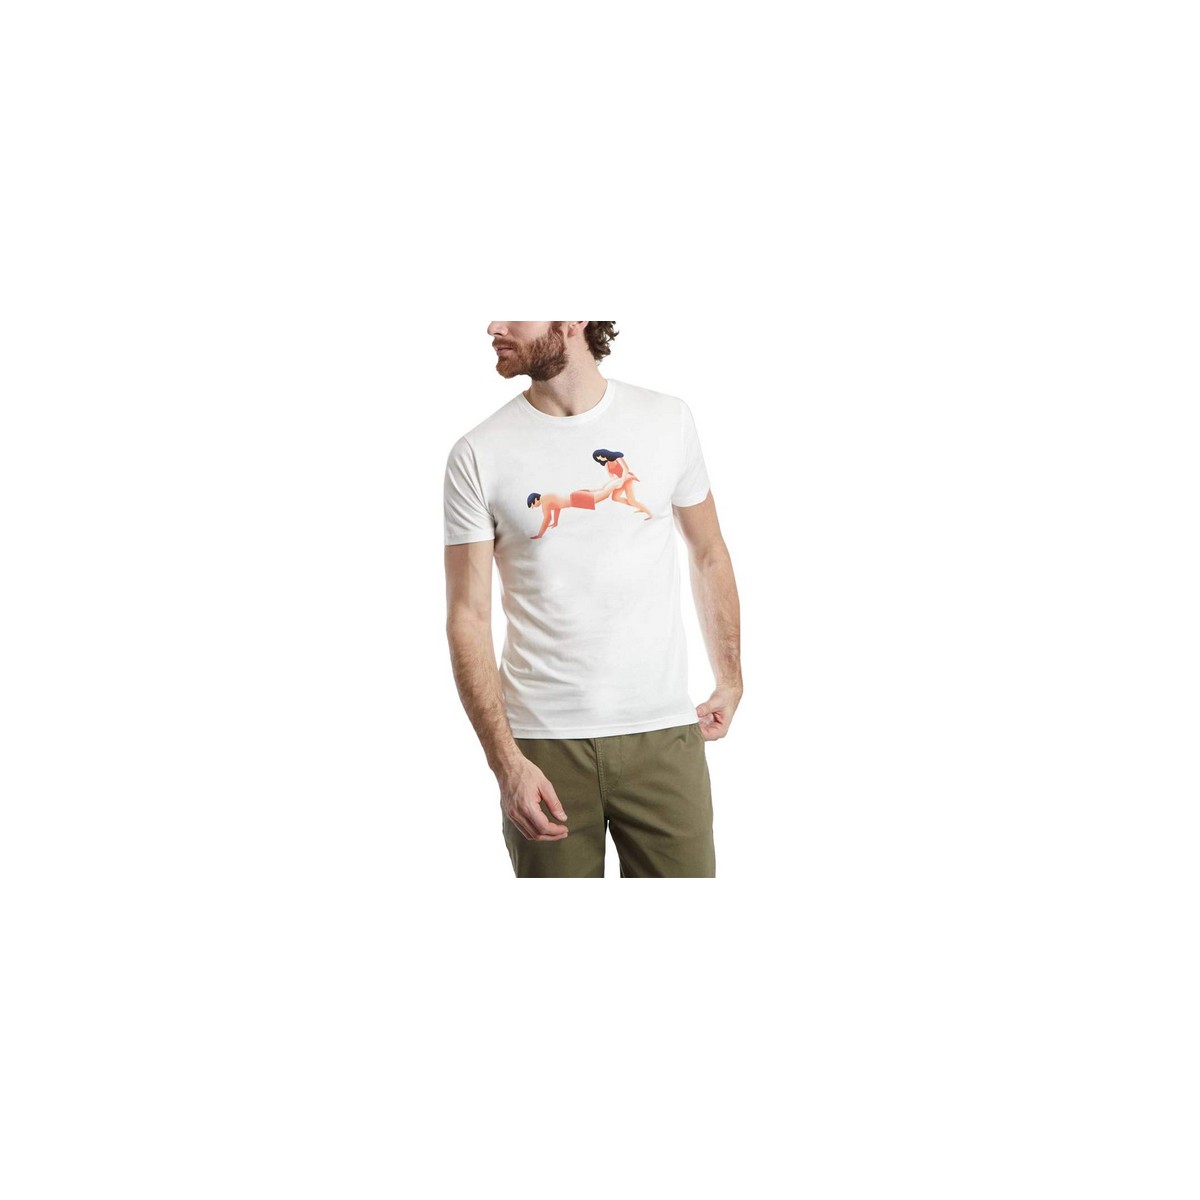 Olow - Tee shirt blanc brouette